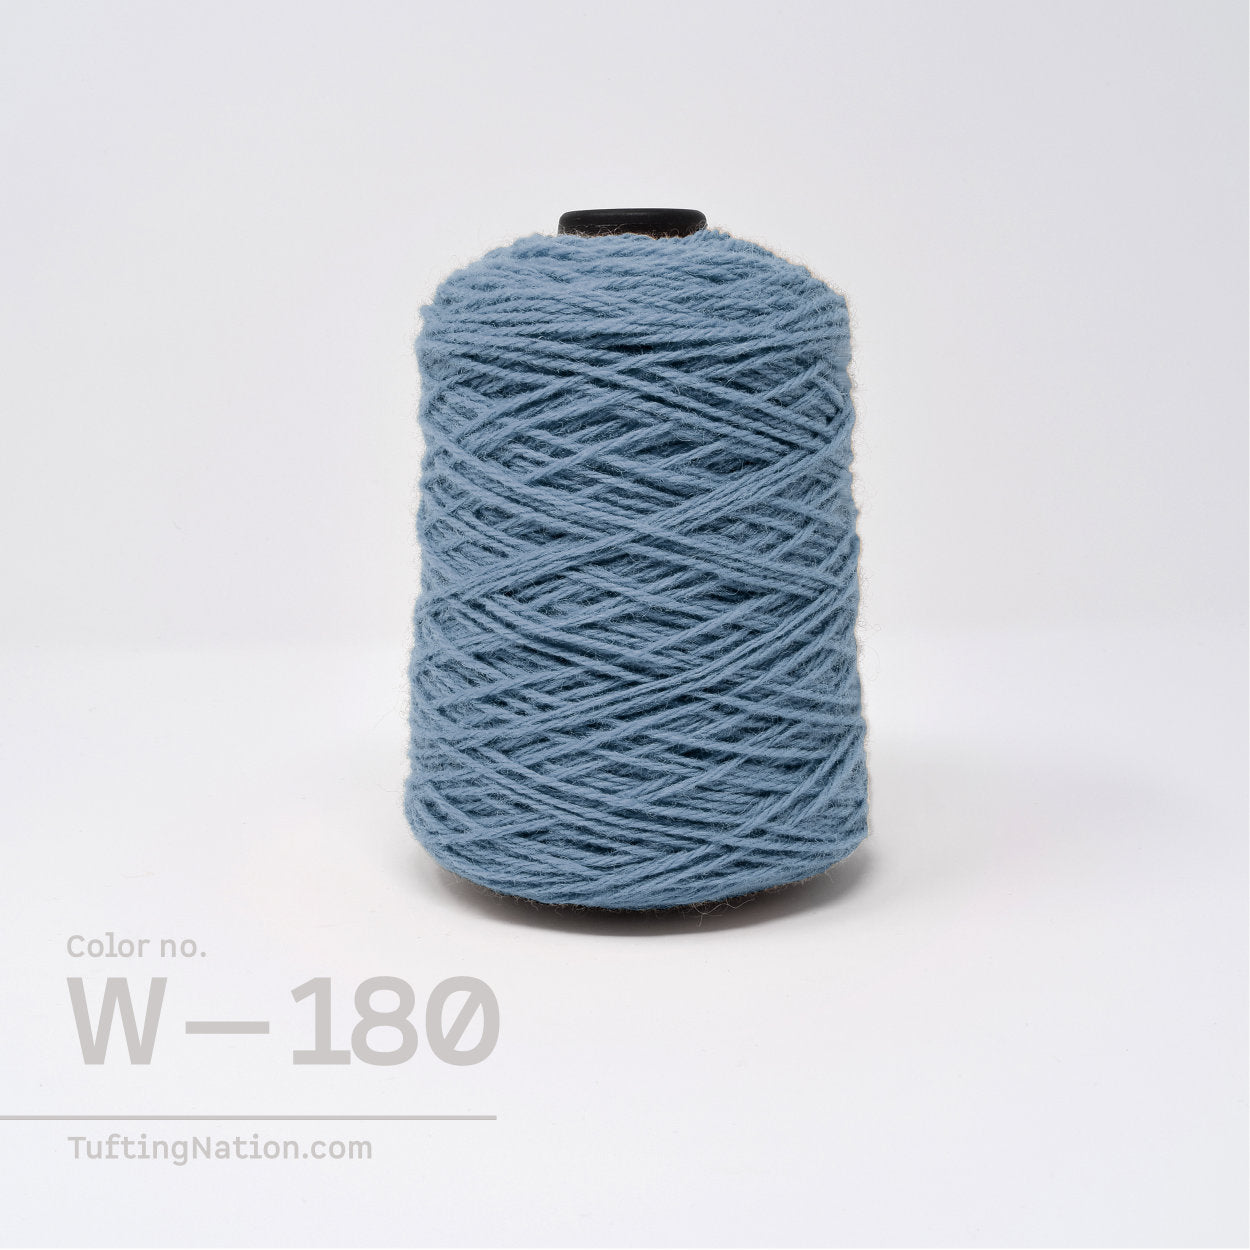 Blue Rug Gun Yarn for Rug Tufting and Wall Tapestry Weaving | TuftingNation